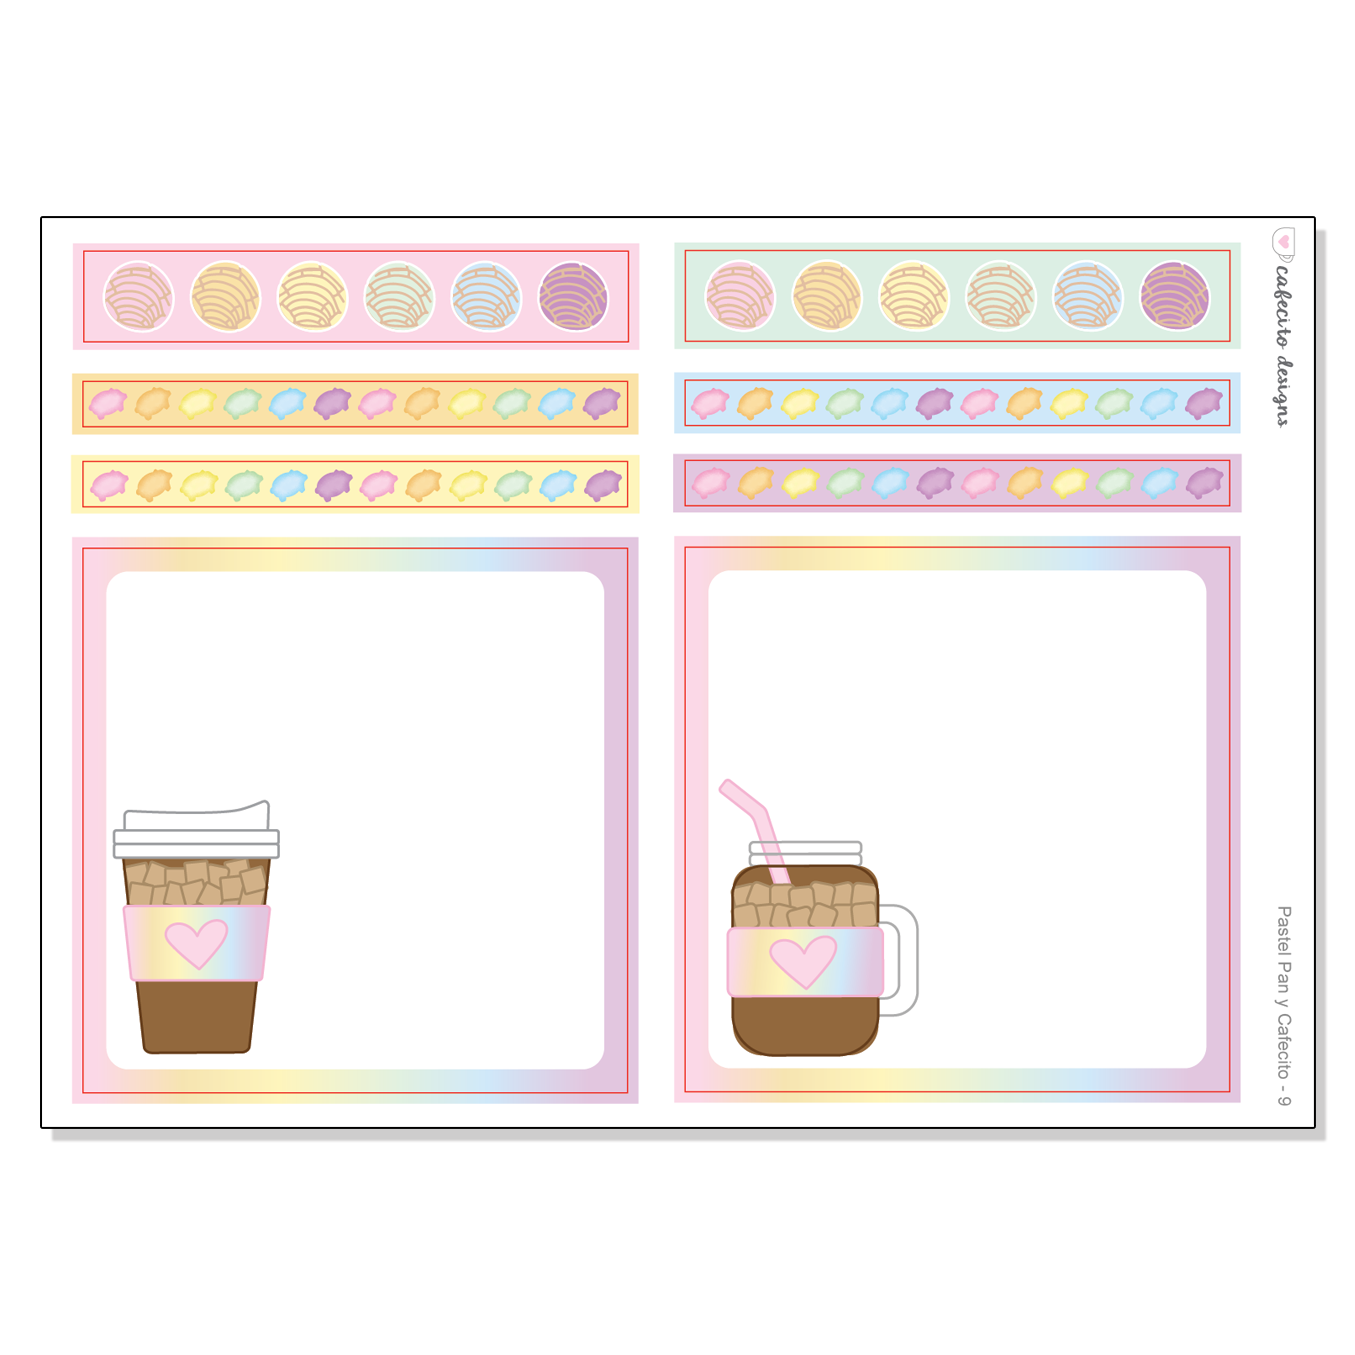 Pastel Pan y Cafecito - Functional Stickers